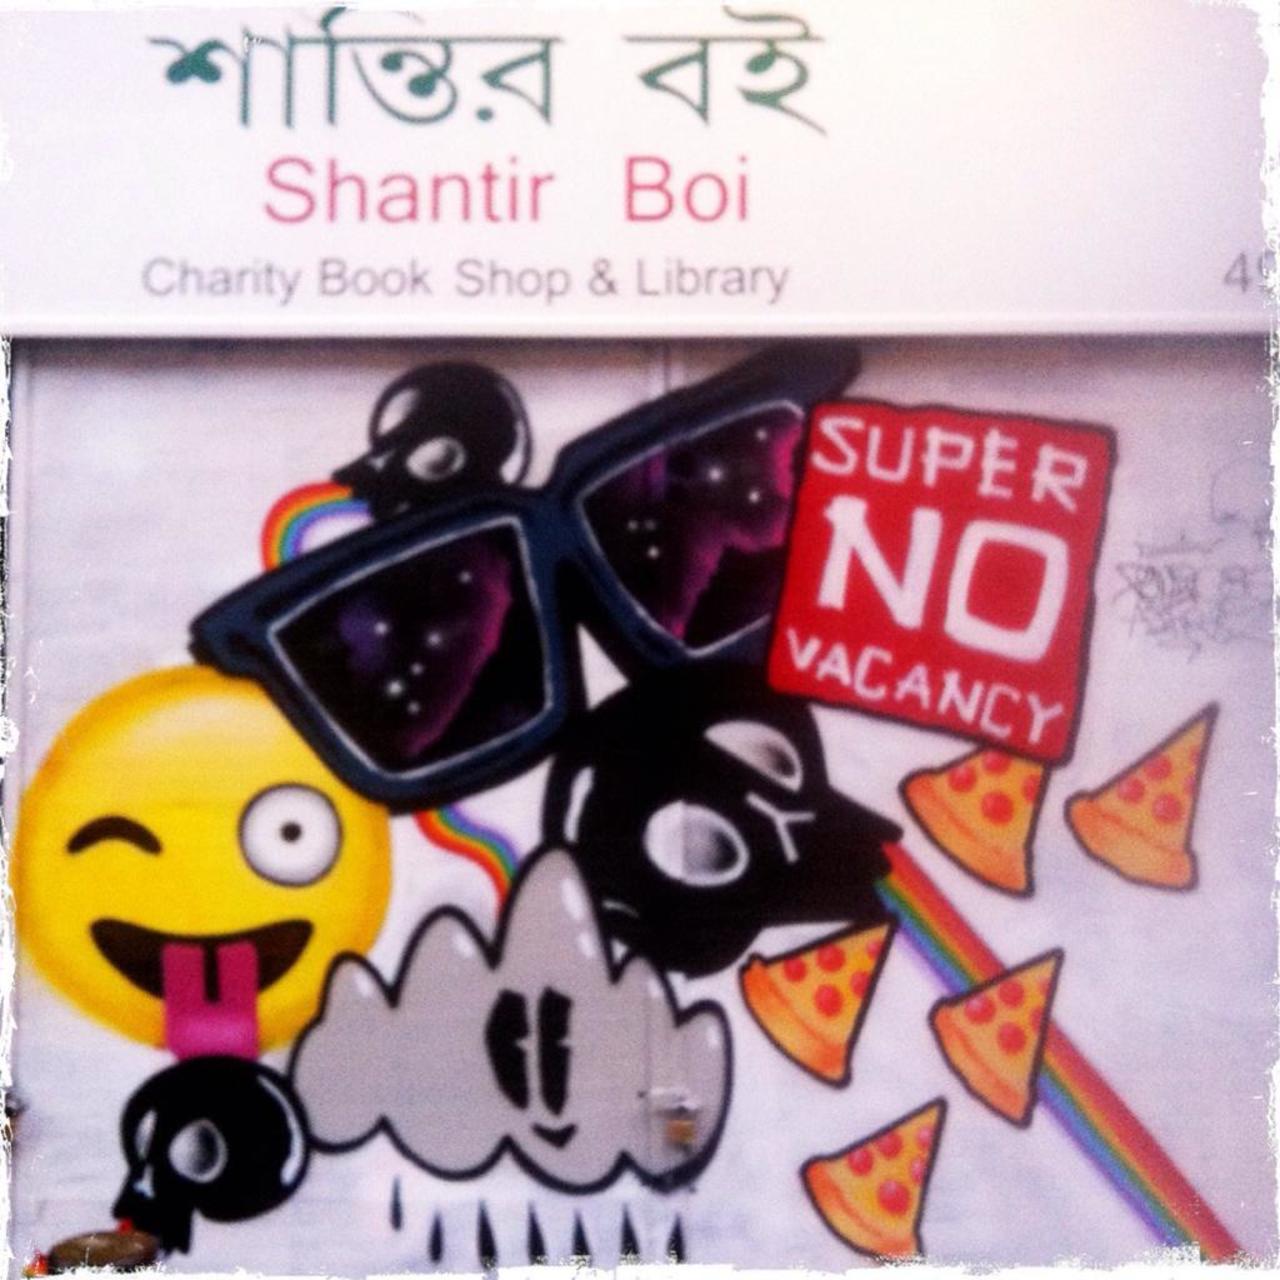 https://goo.gl/t4fpx2 Shutter art at the Shantir Boi charity shop on Fashion Street

#art #streetart #graffiti http://t.co/UHeTnHwOMI